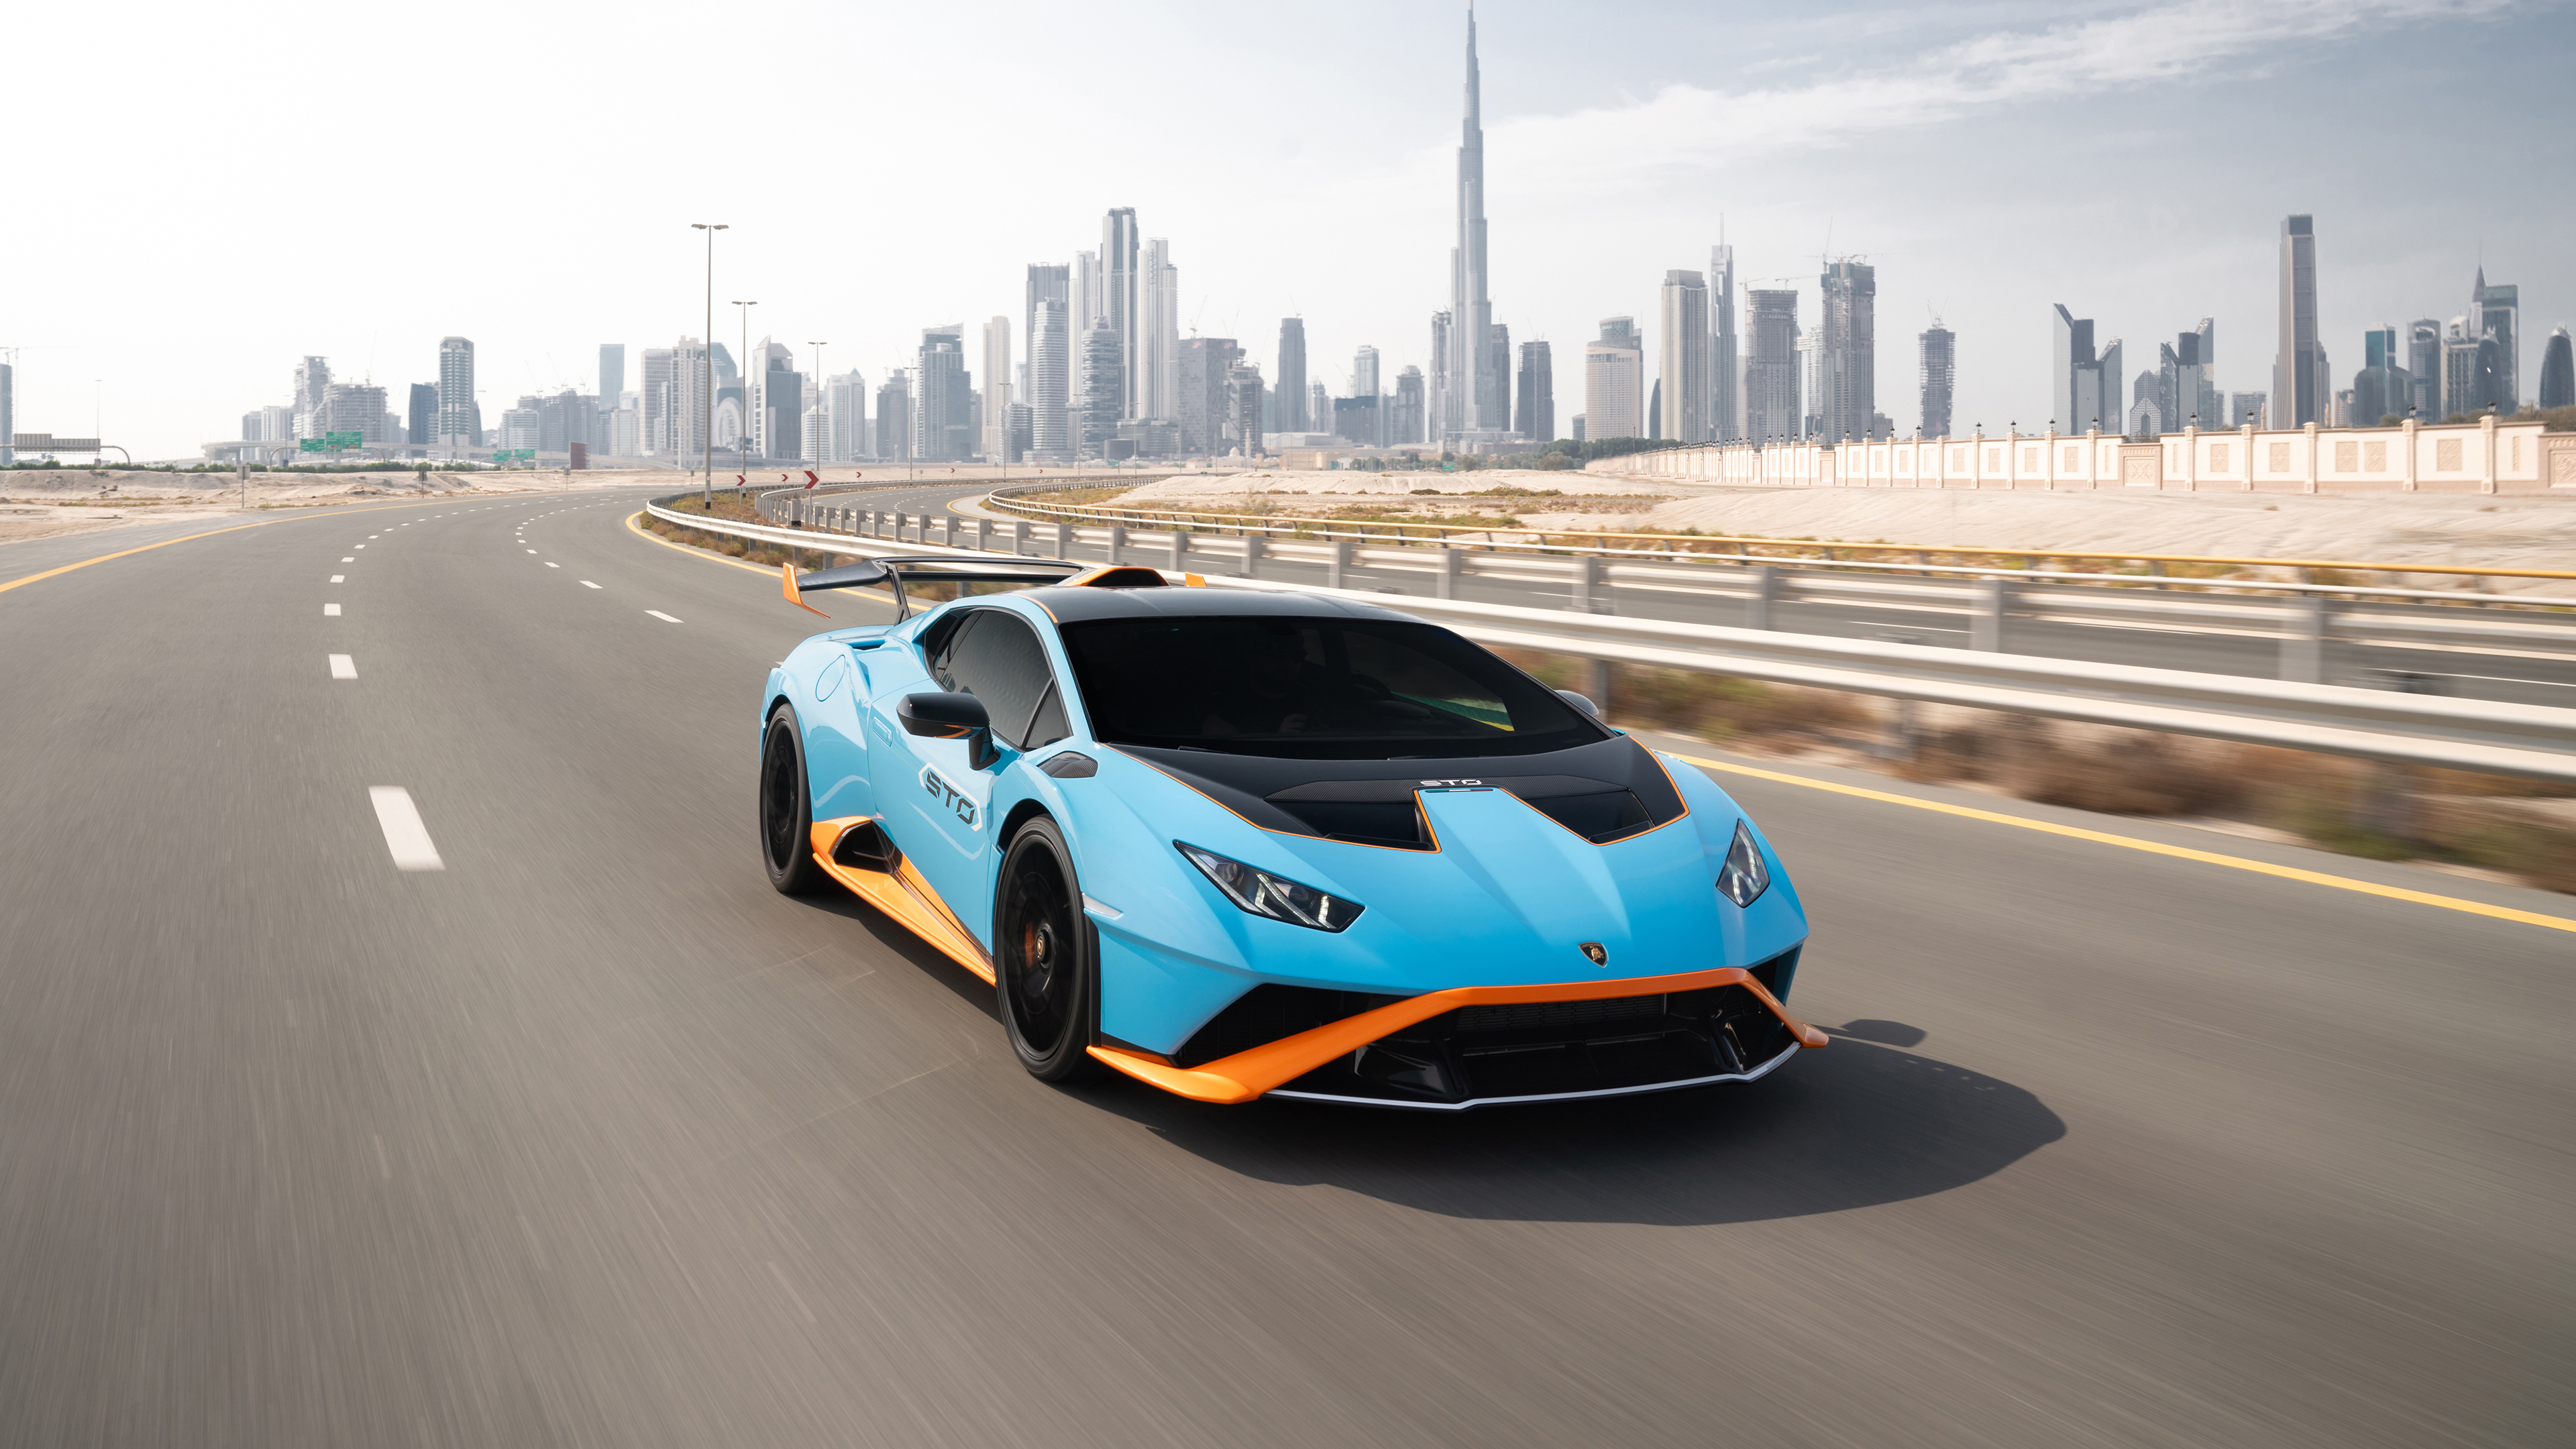 Lamborghini Huracan STO Lamborghini Huracan Super Car Italian Supercars Car Vehicle Road Dubai Blue Wallpaper:3840x2160